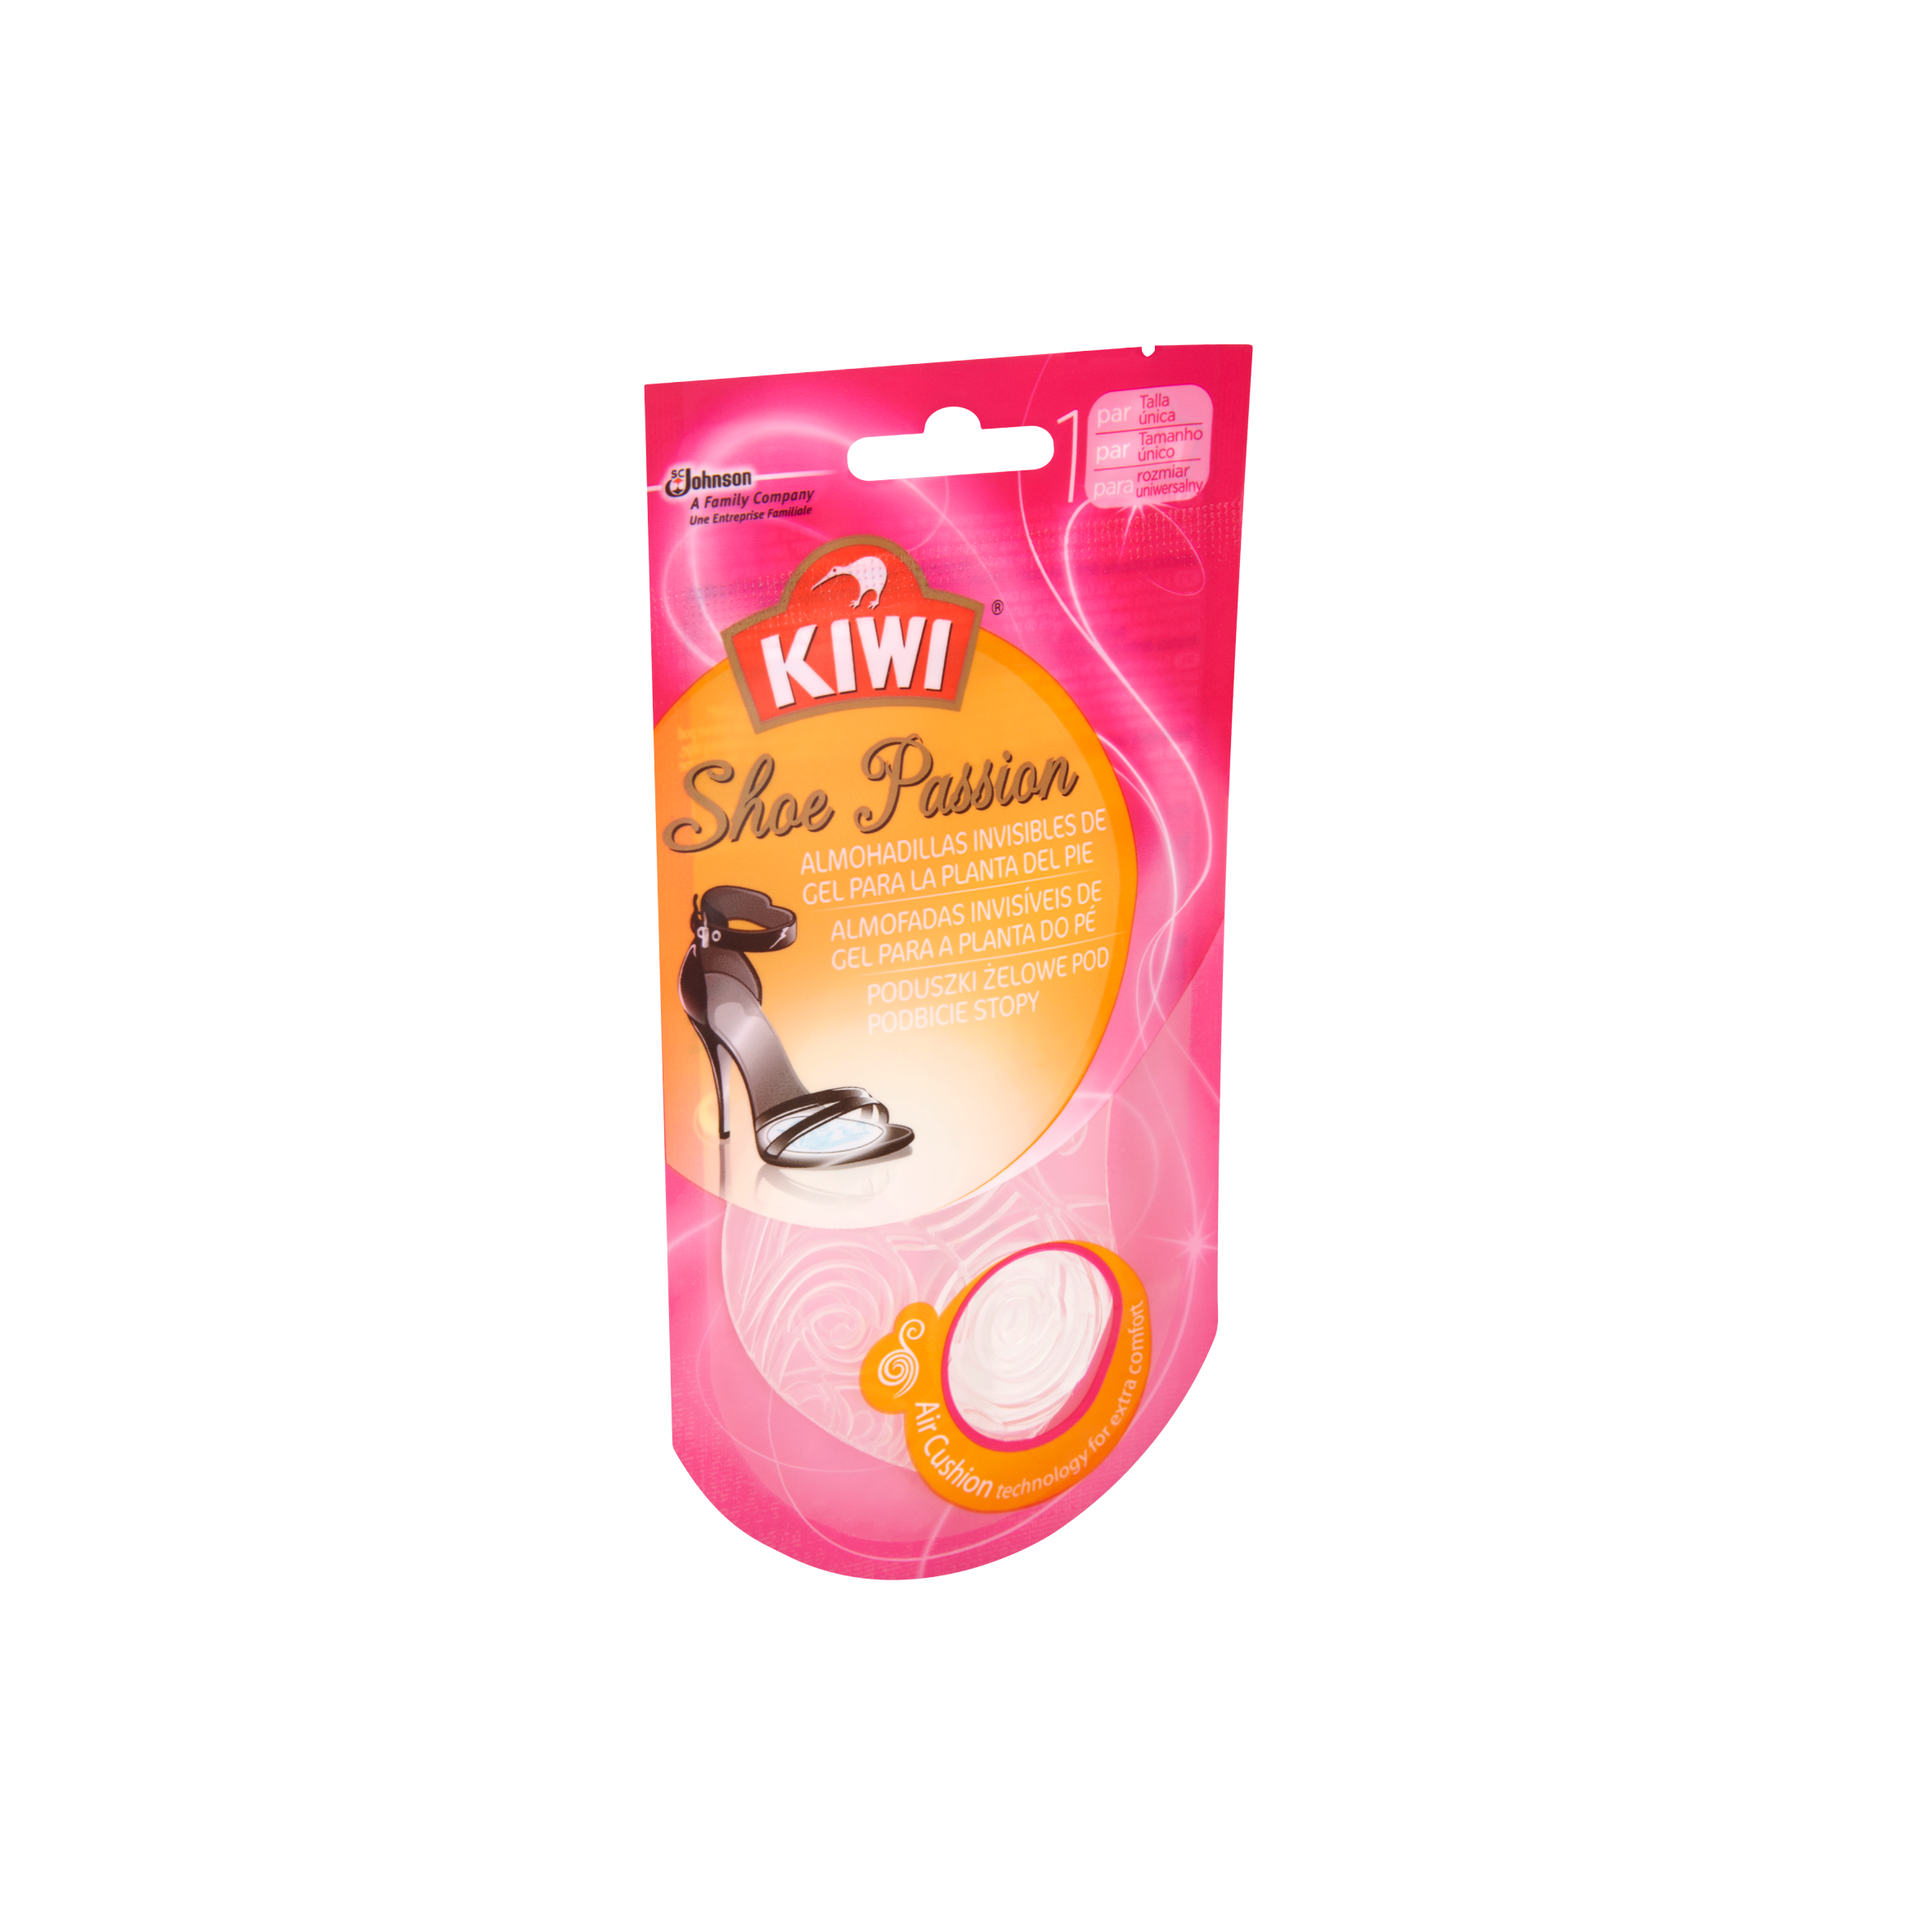 kiwi insoles